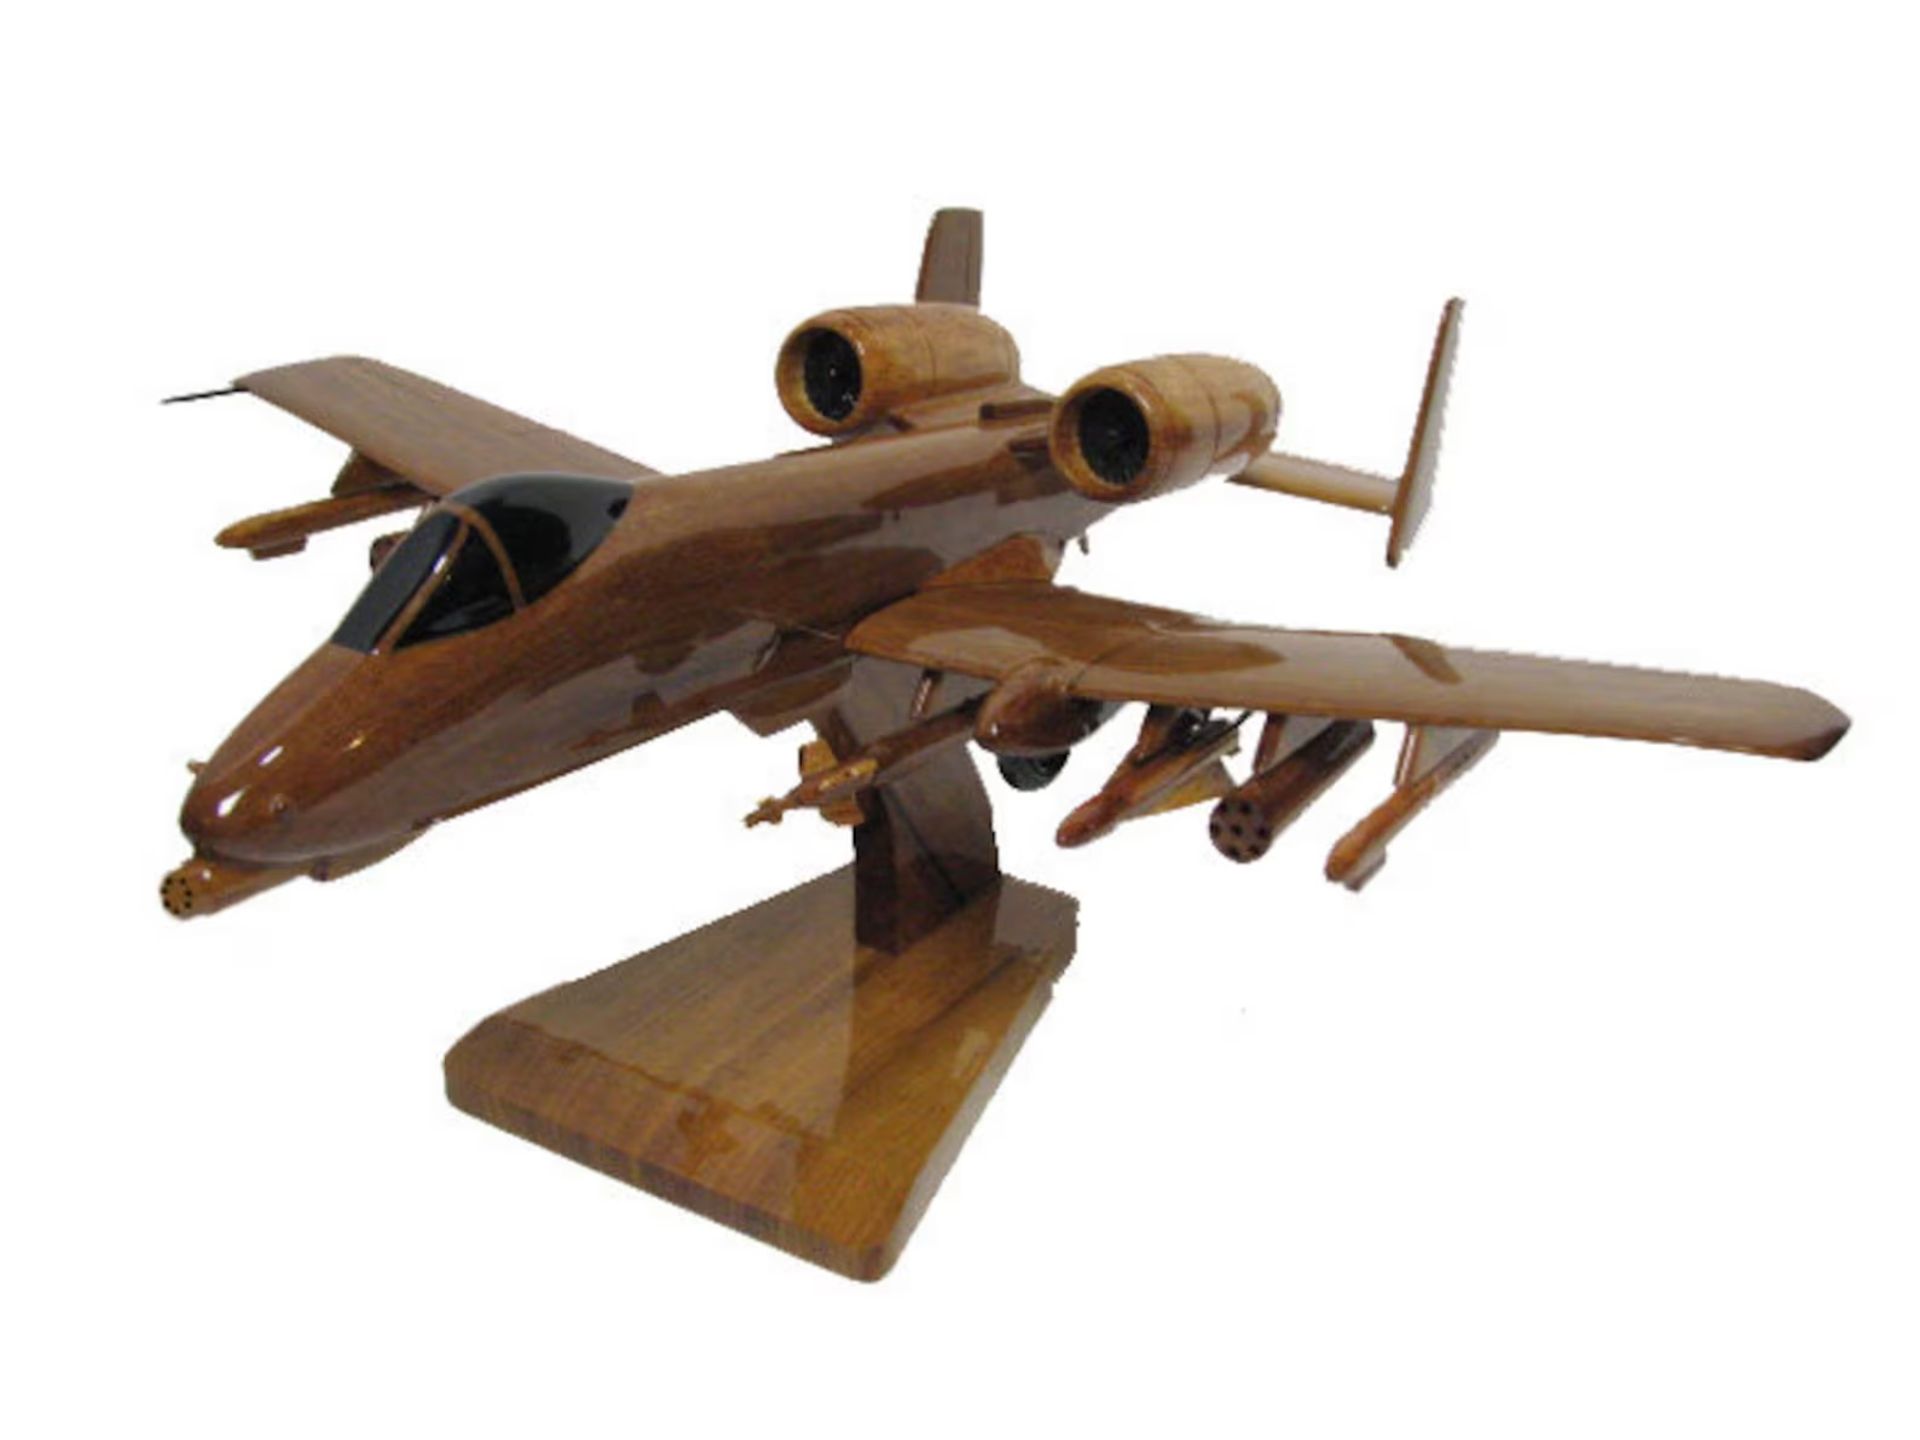 A10 Thunderbolt II "Warthog" Wooden Scale Model